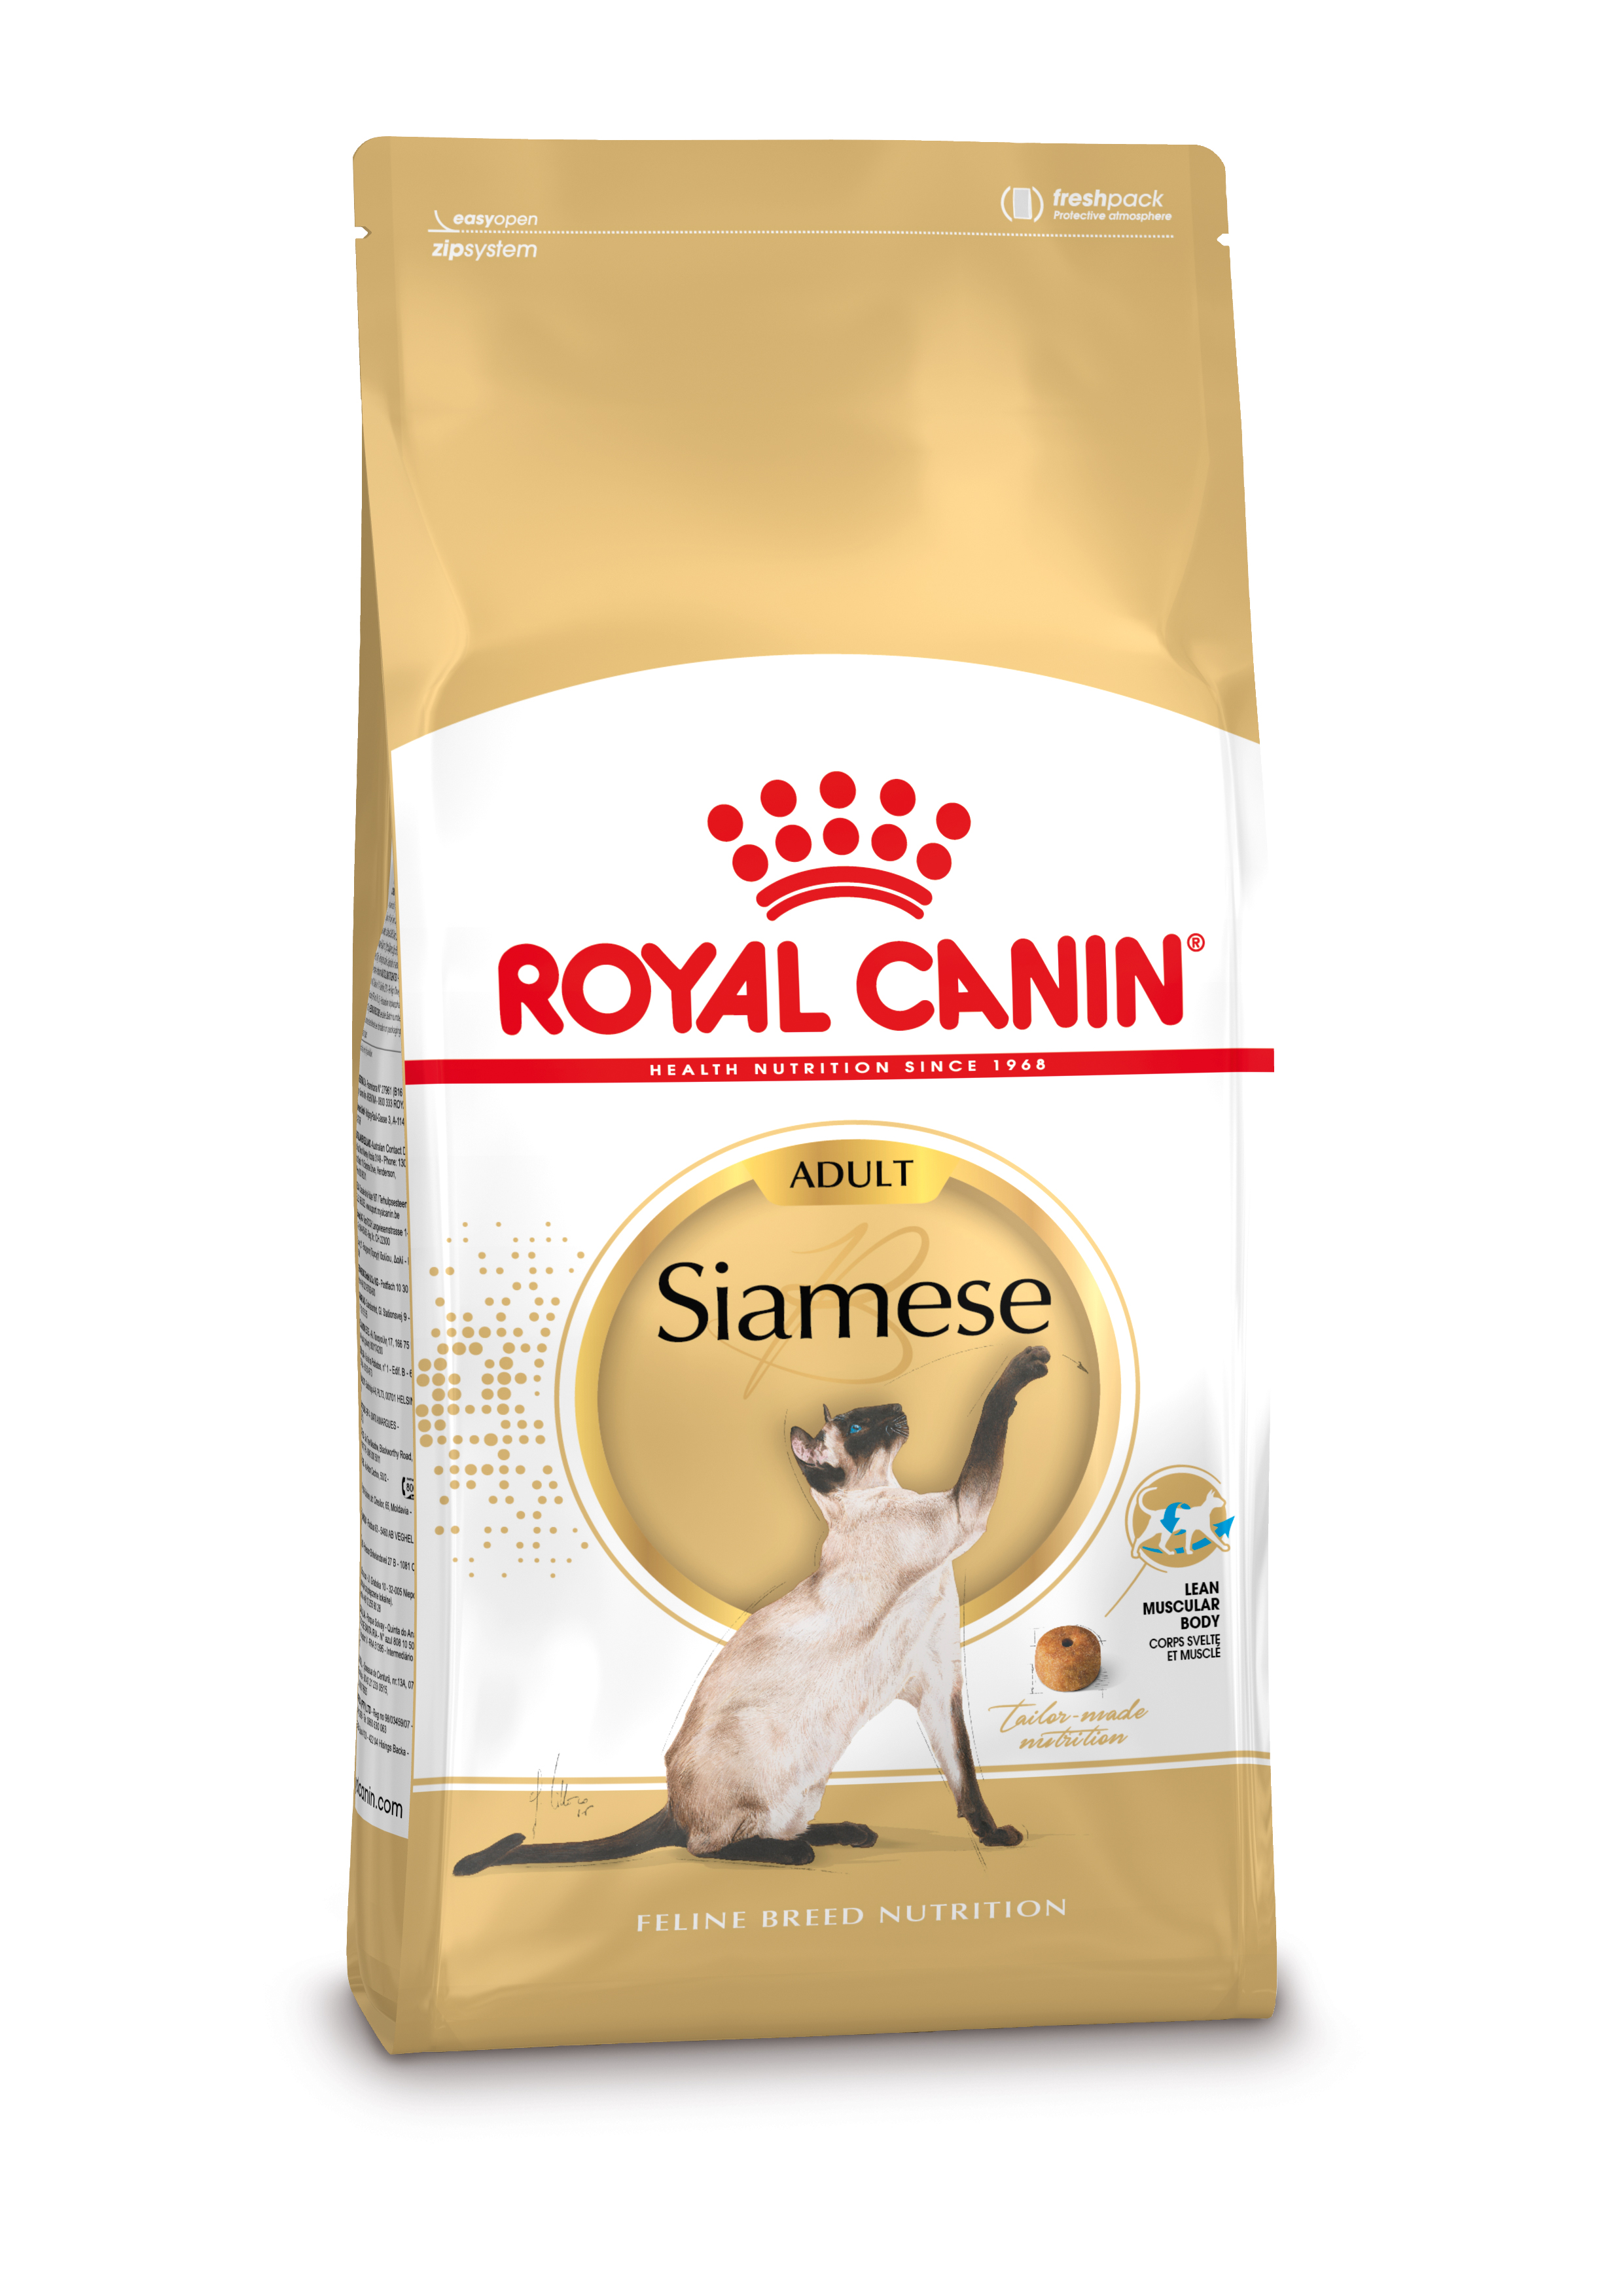 Afbeelding Royal Canin Adult Siamese kattenvoer 4 kg door Brekz.nl